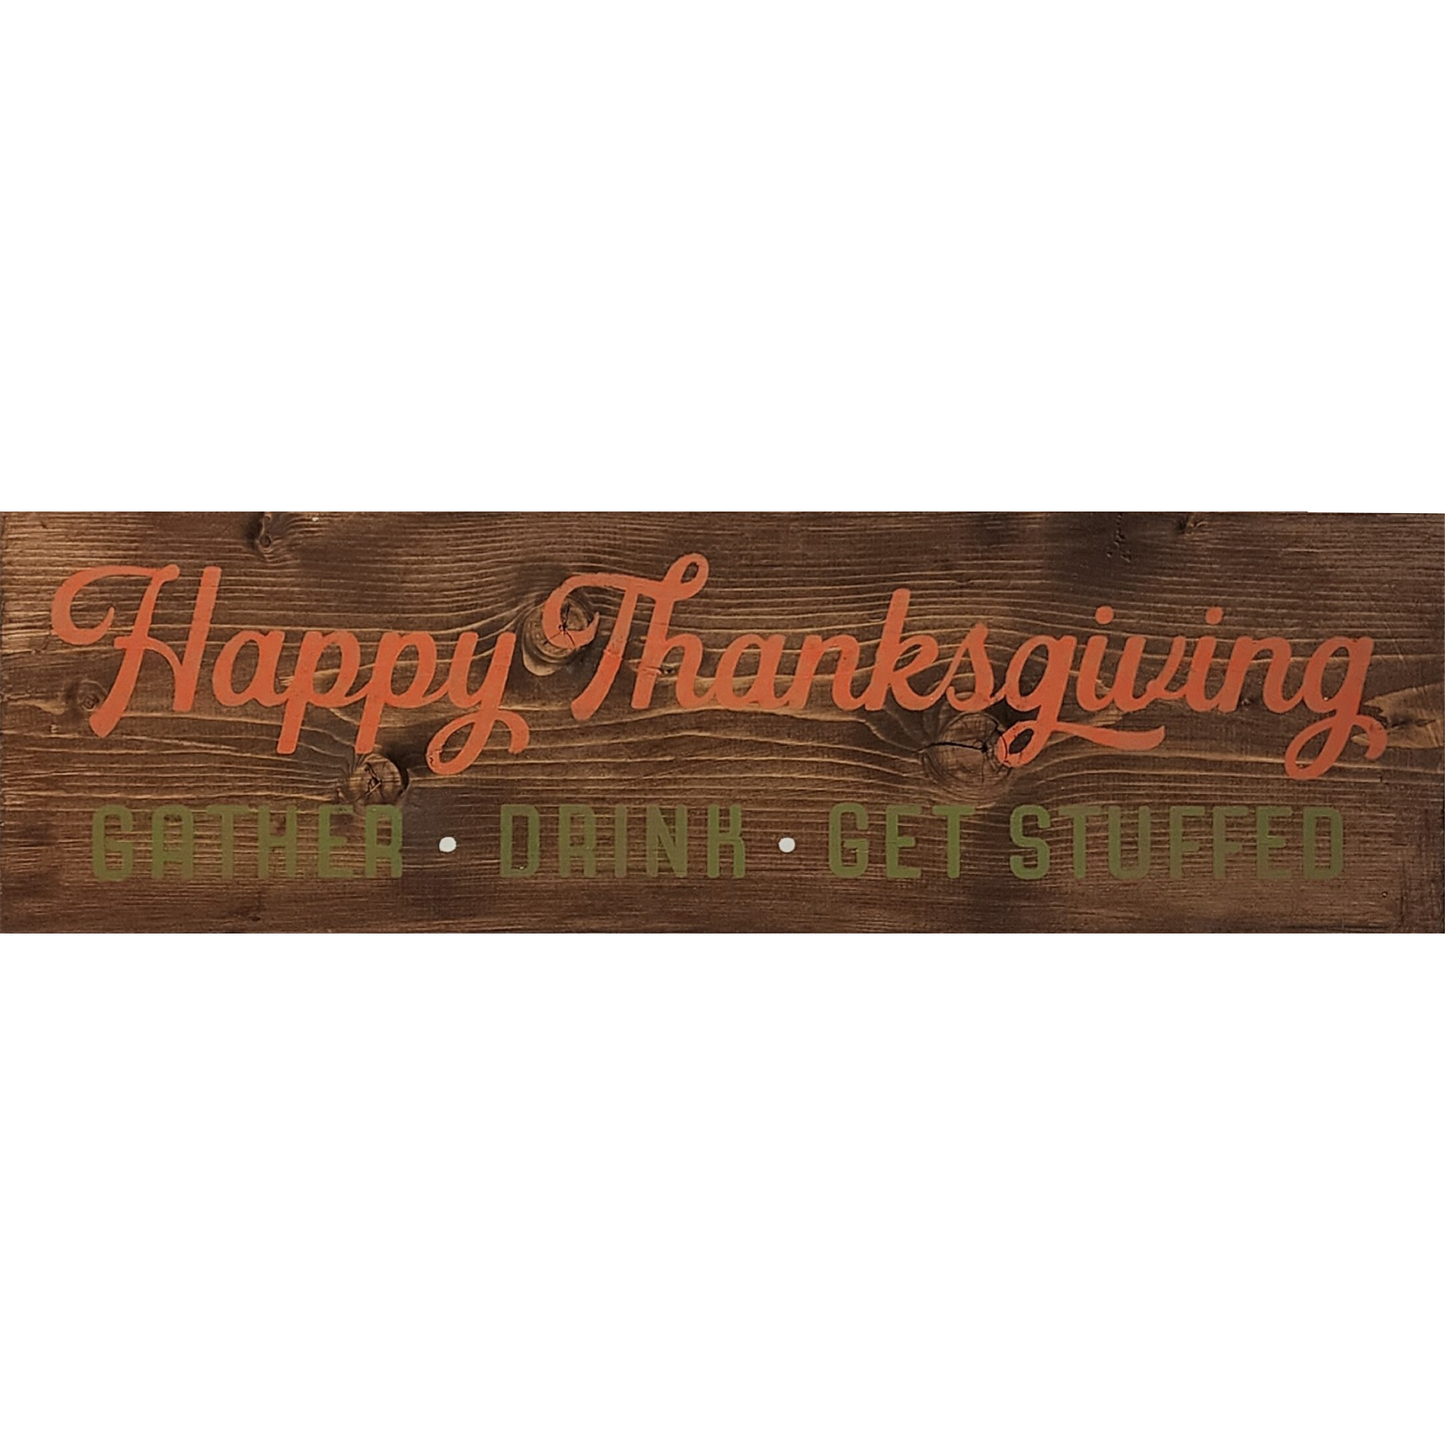 Happy Thanksgiving - Gather - Drink - Get Stuffed